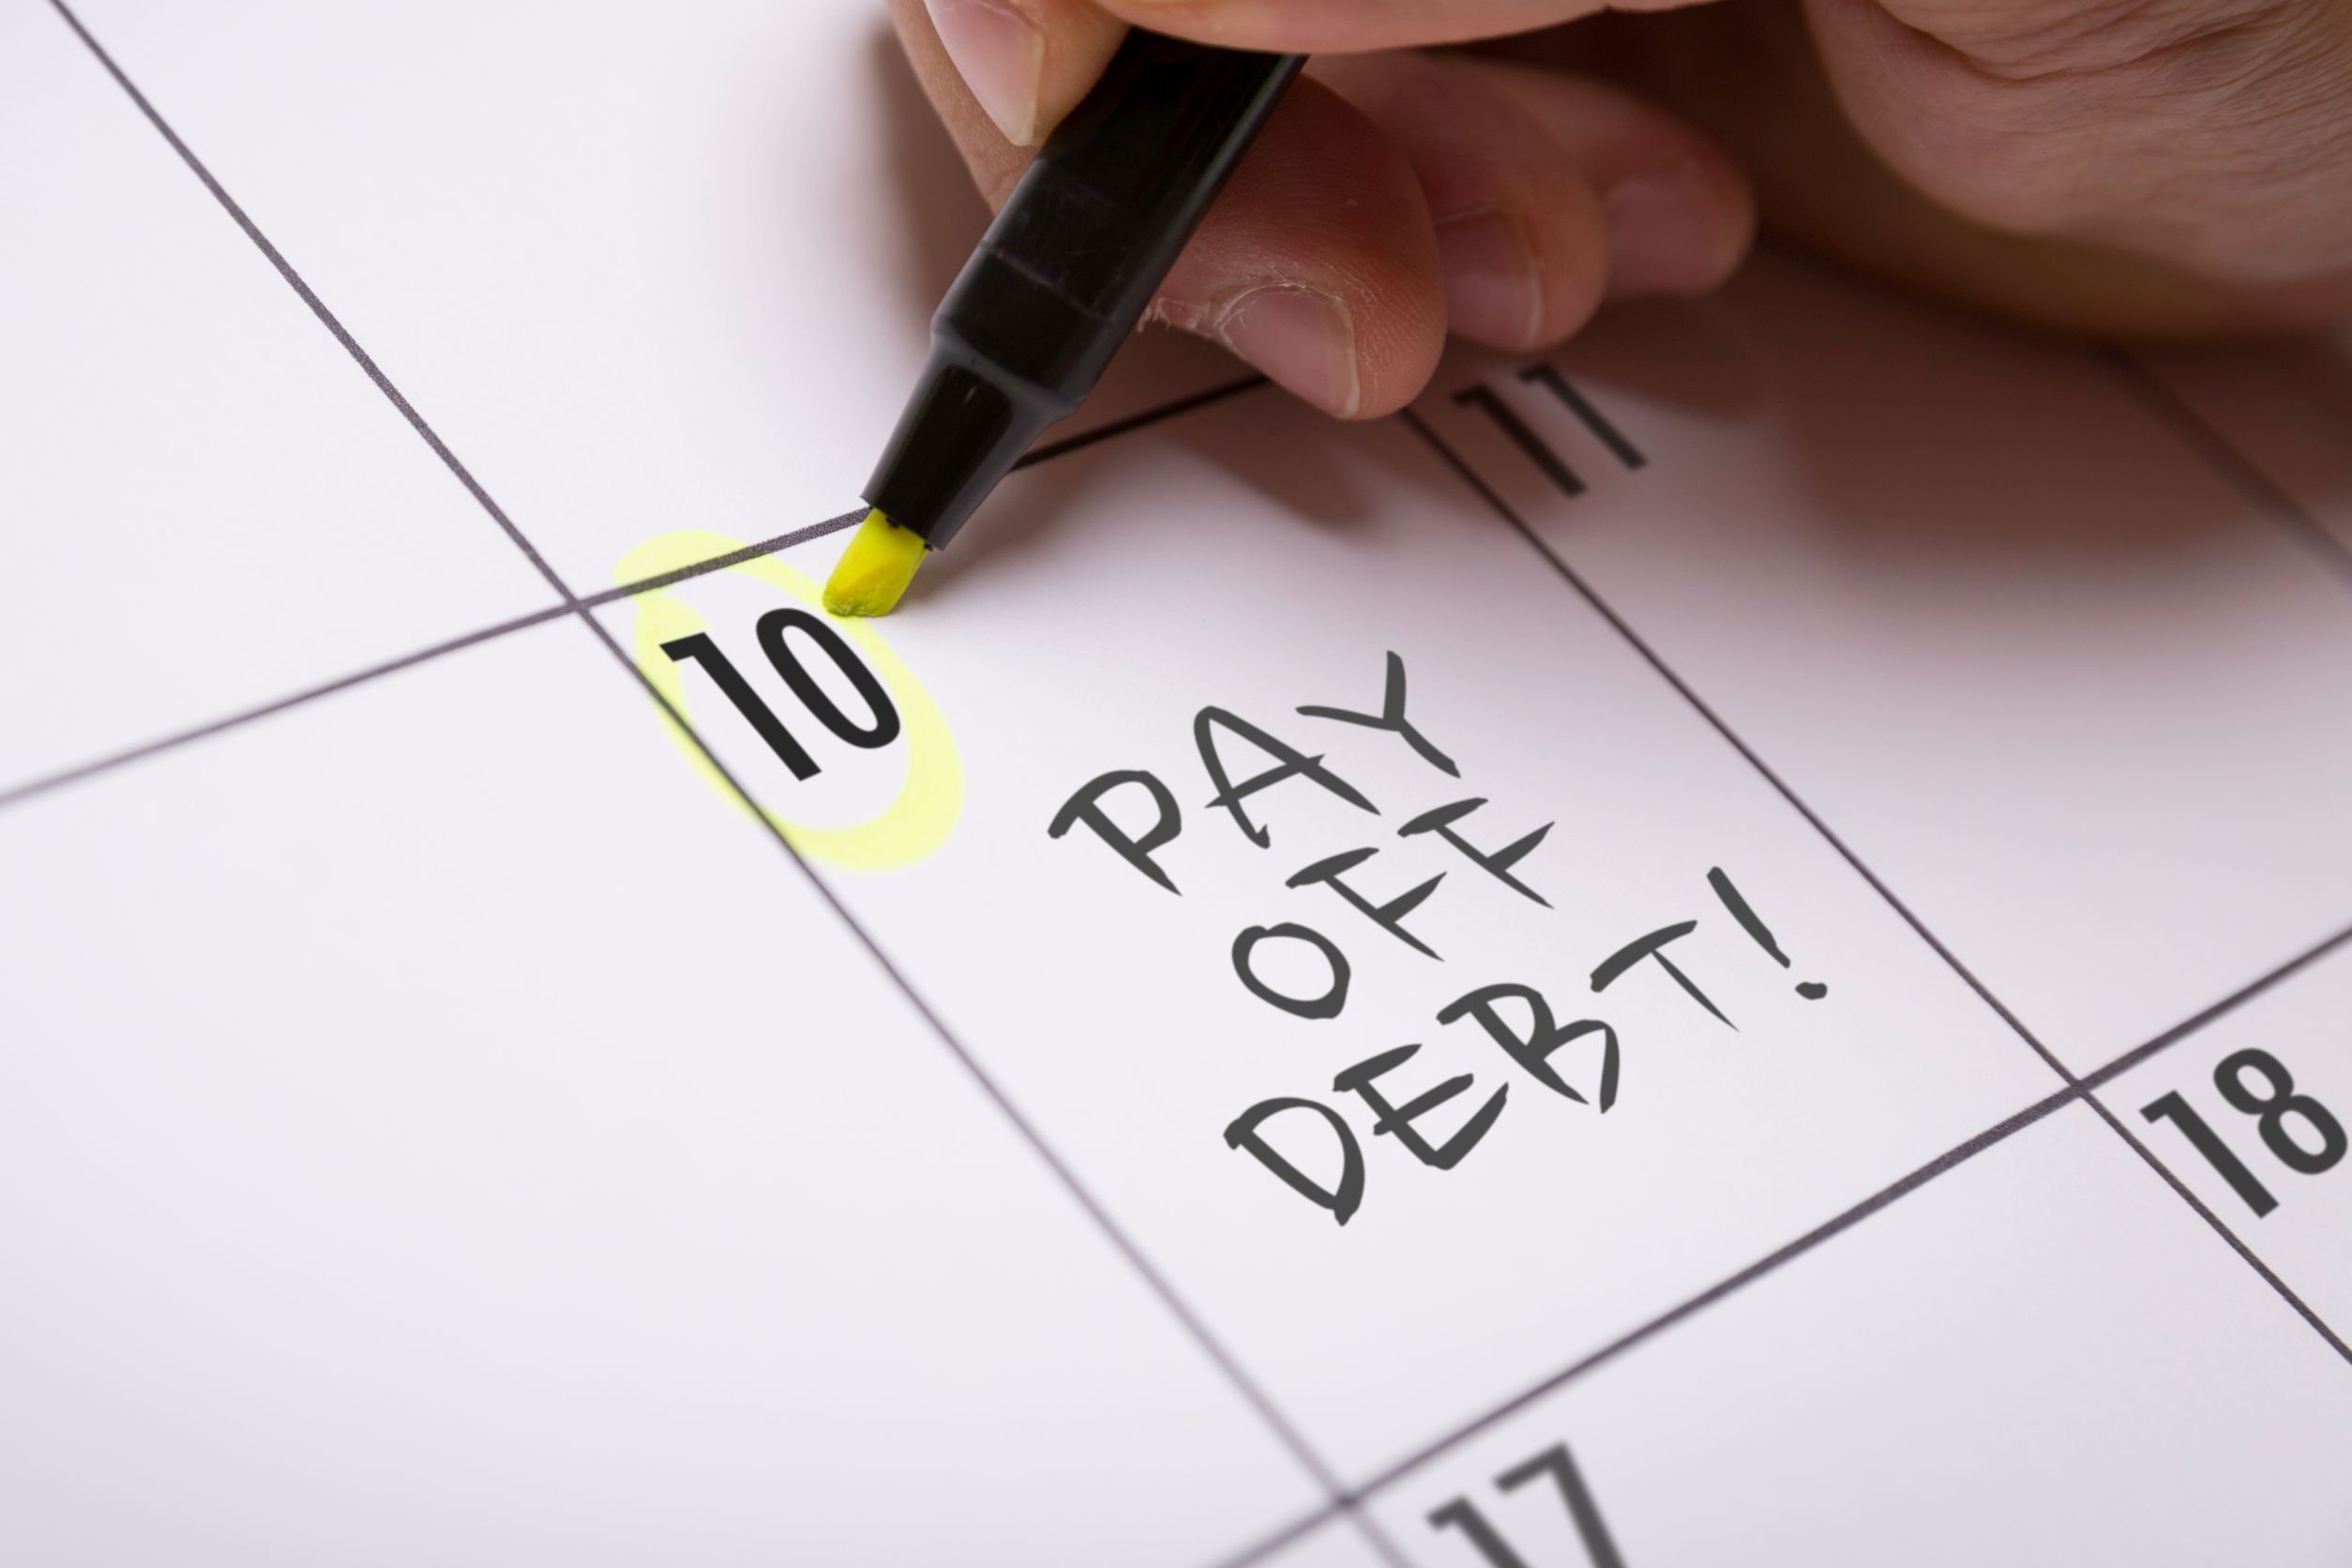 Pay Off Debt